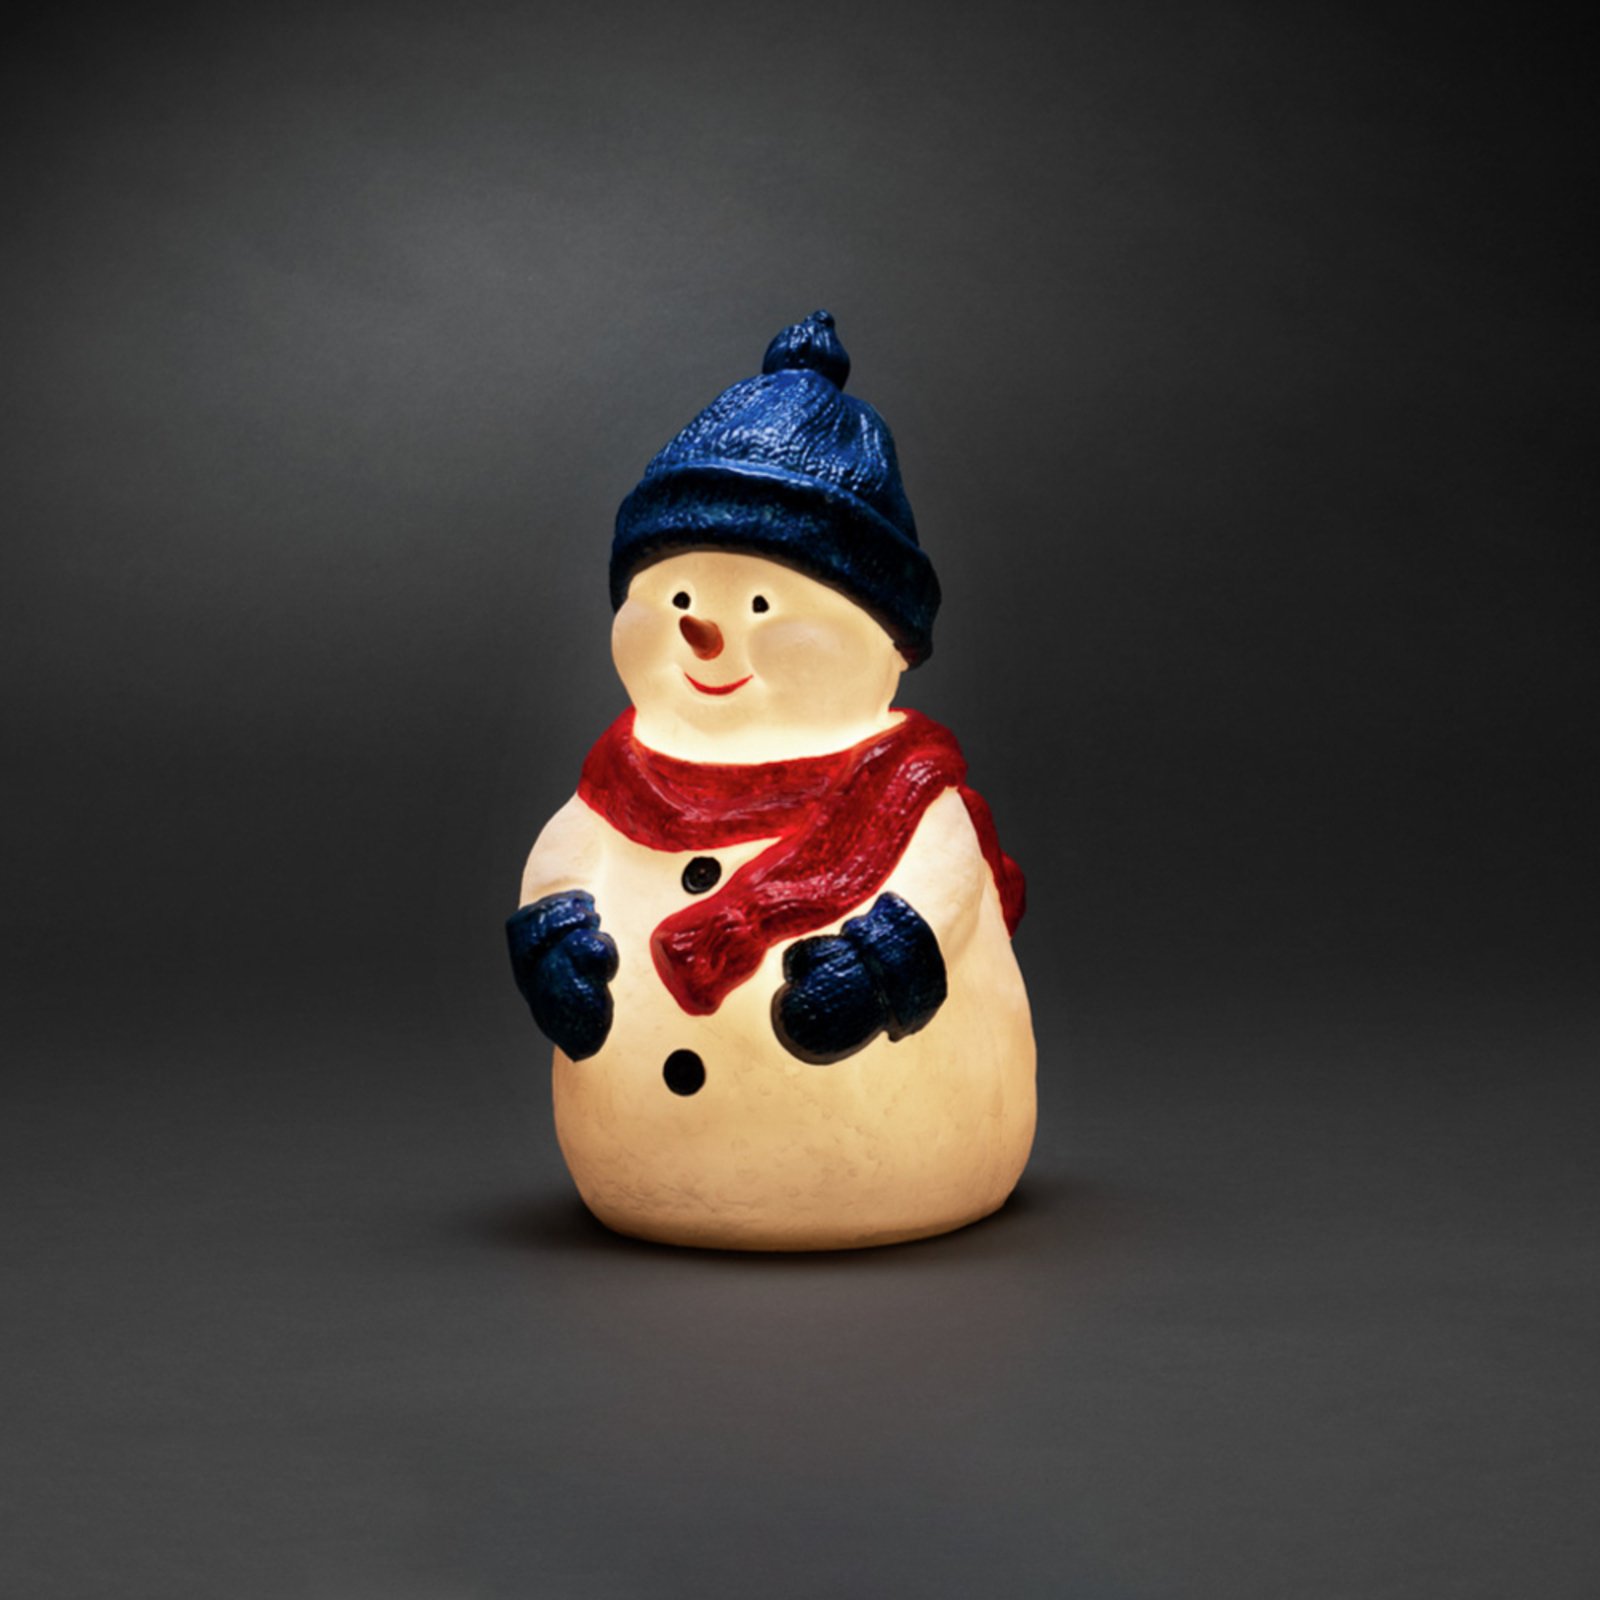 Figurine LED Bonhomme de neige, blanc chaud, IP44